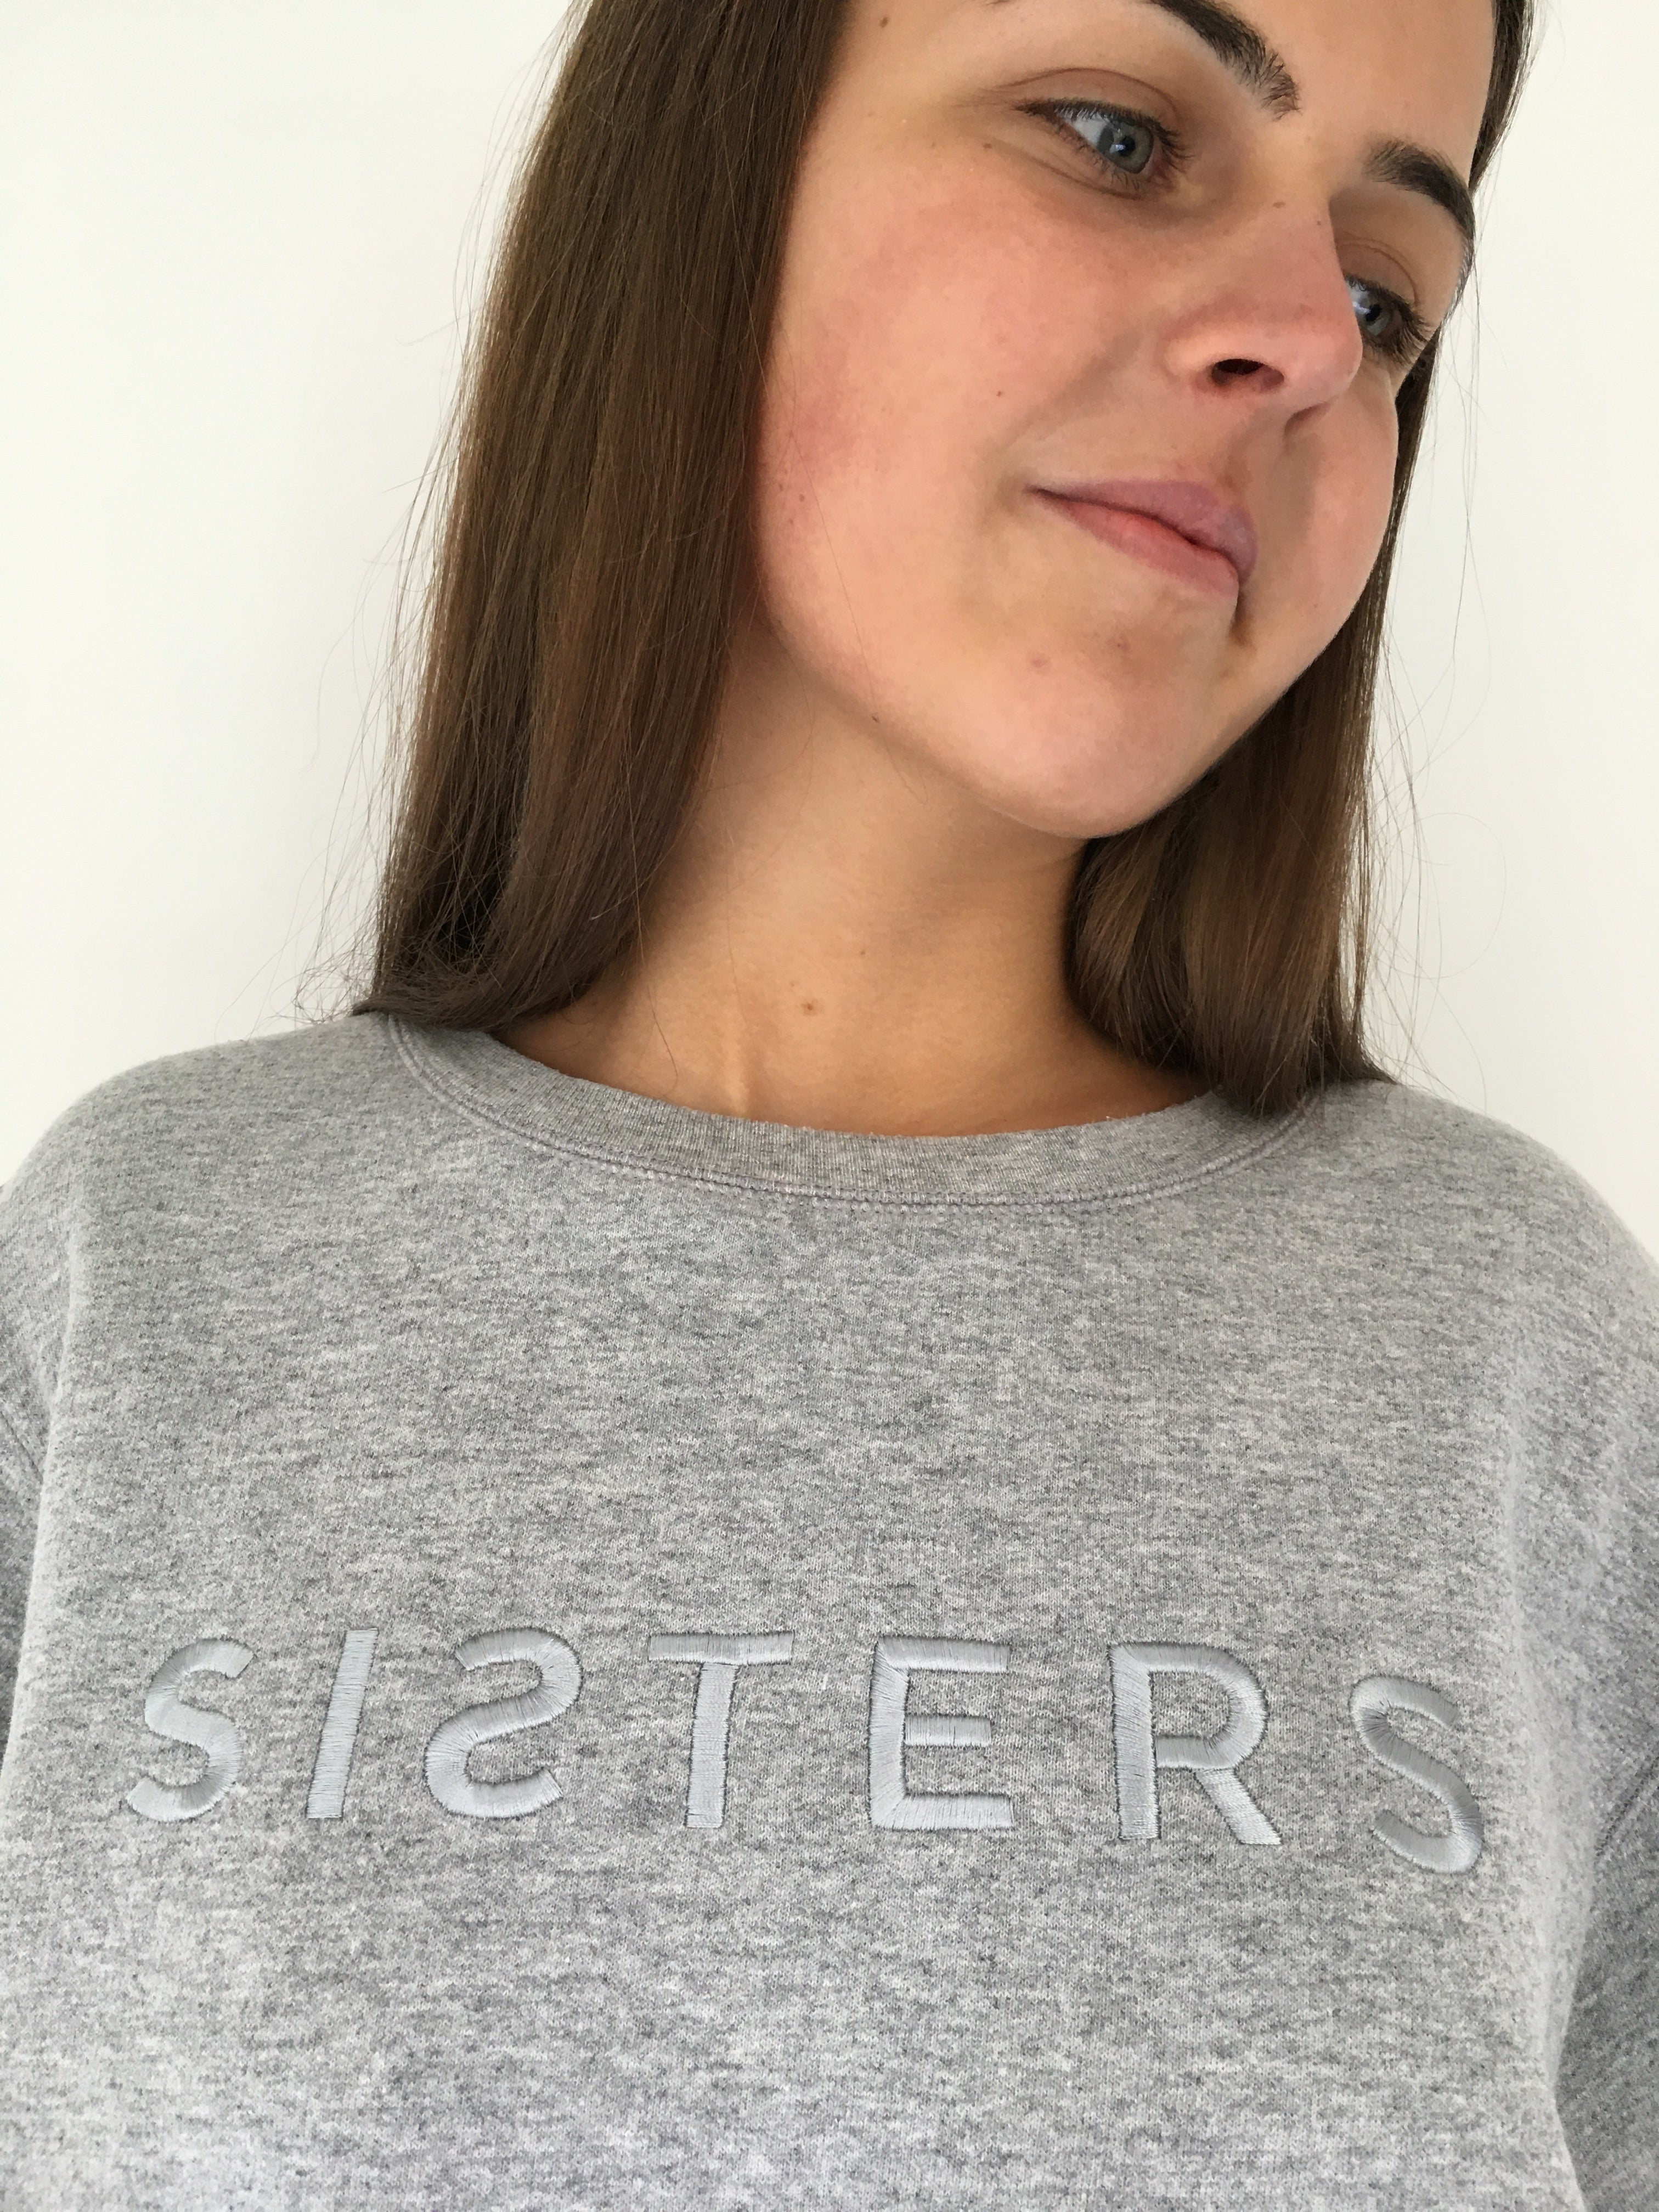 SISTERS embroidered sweatshirt Large